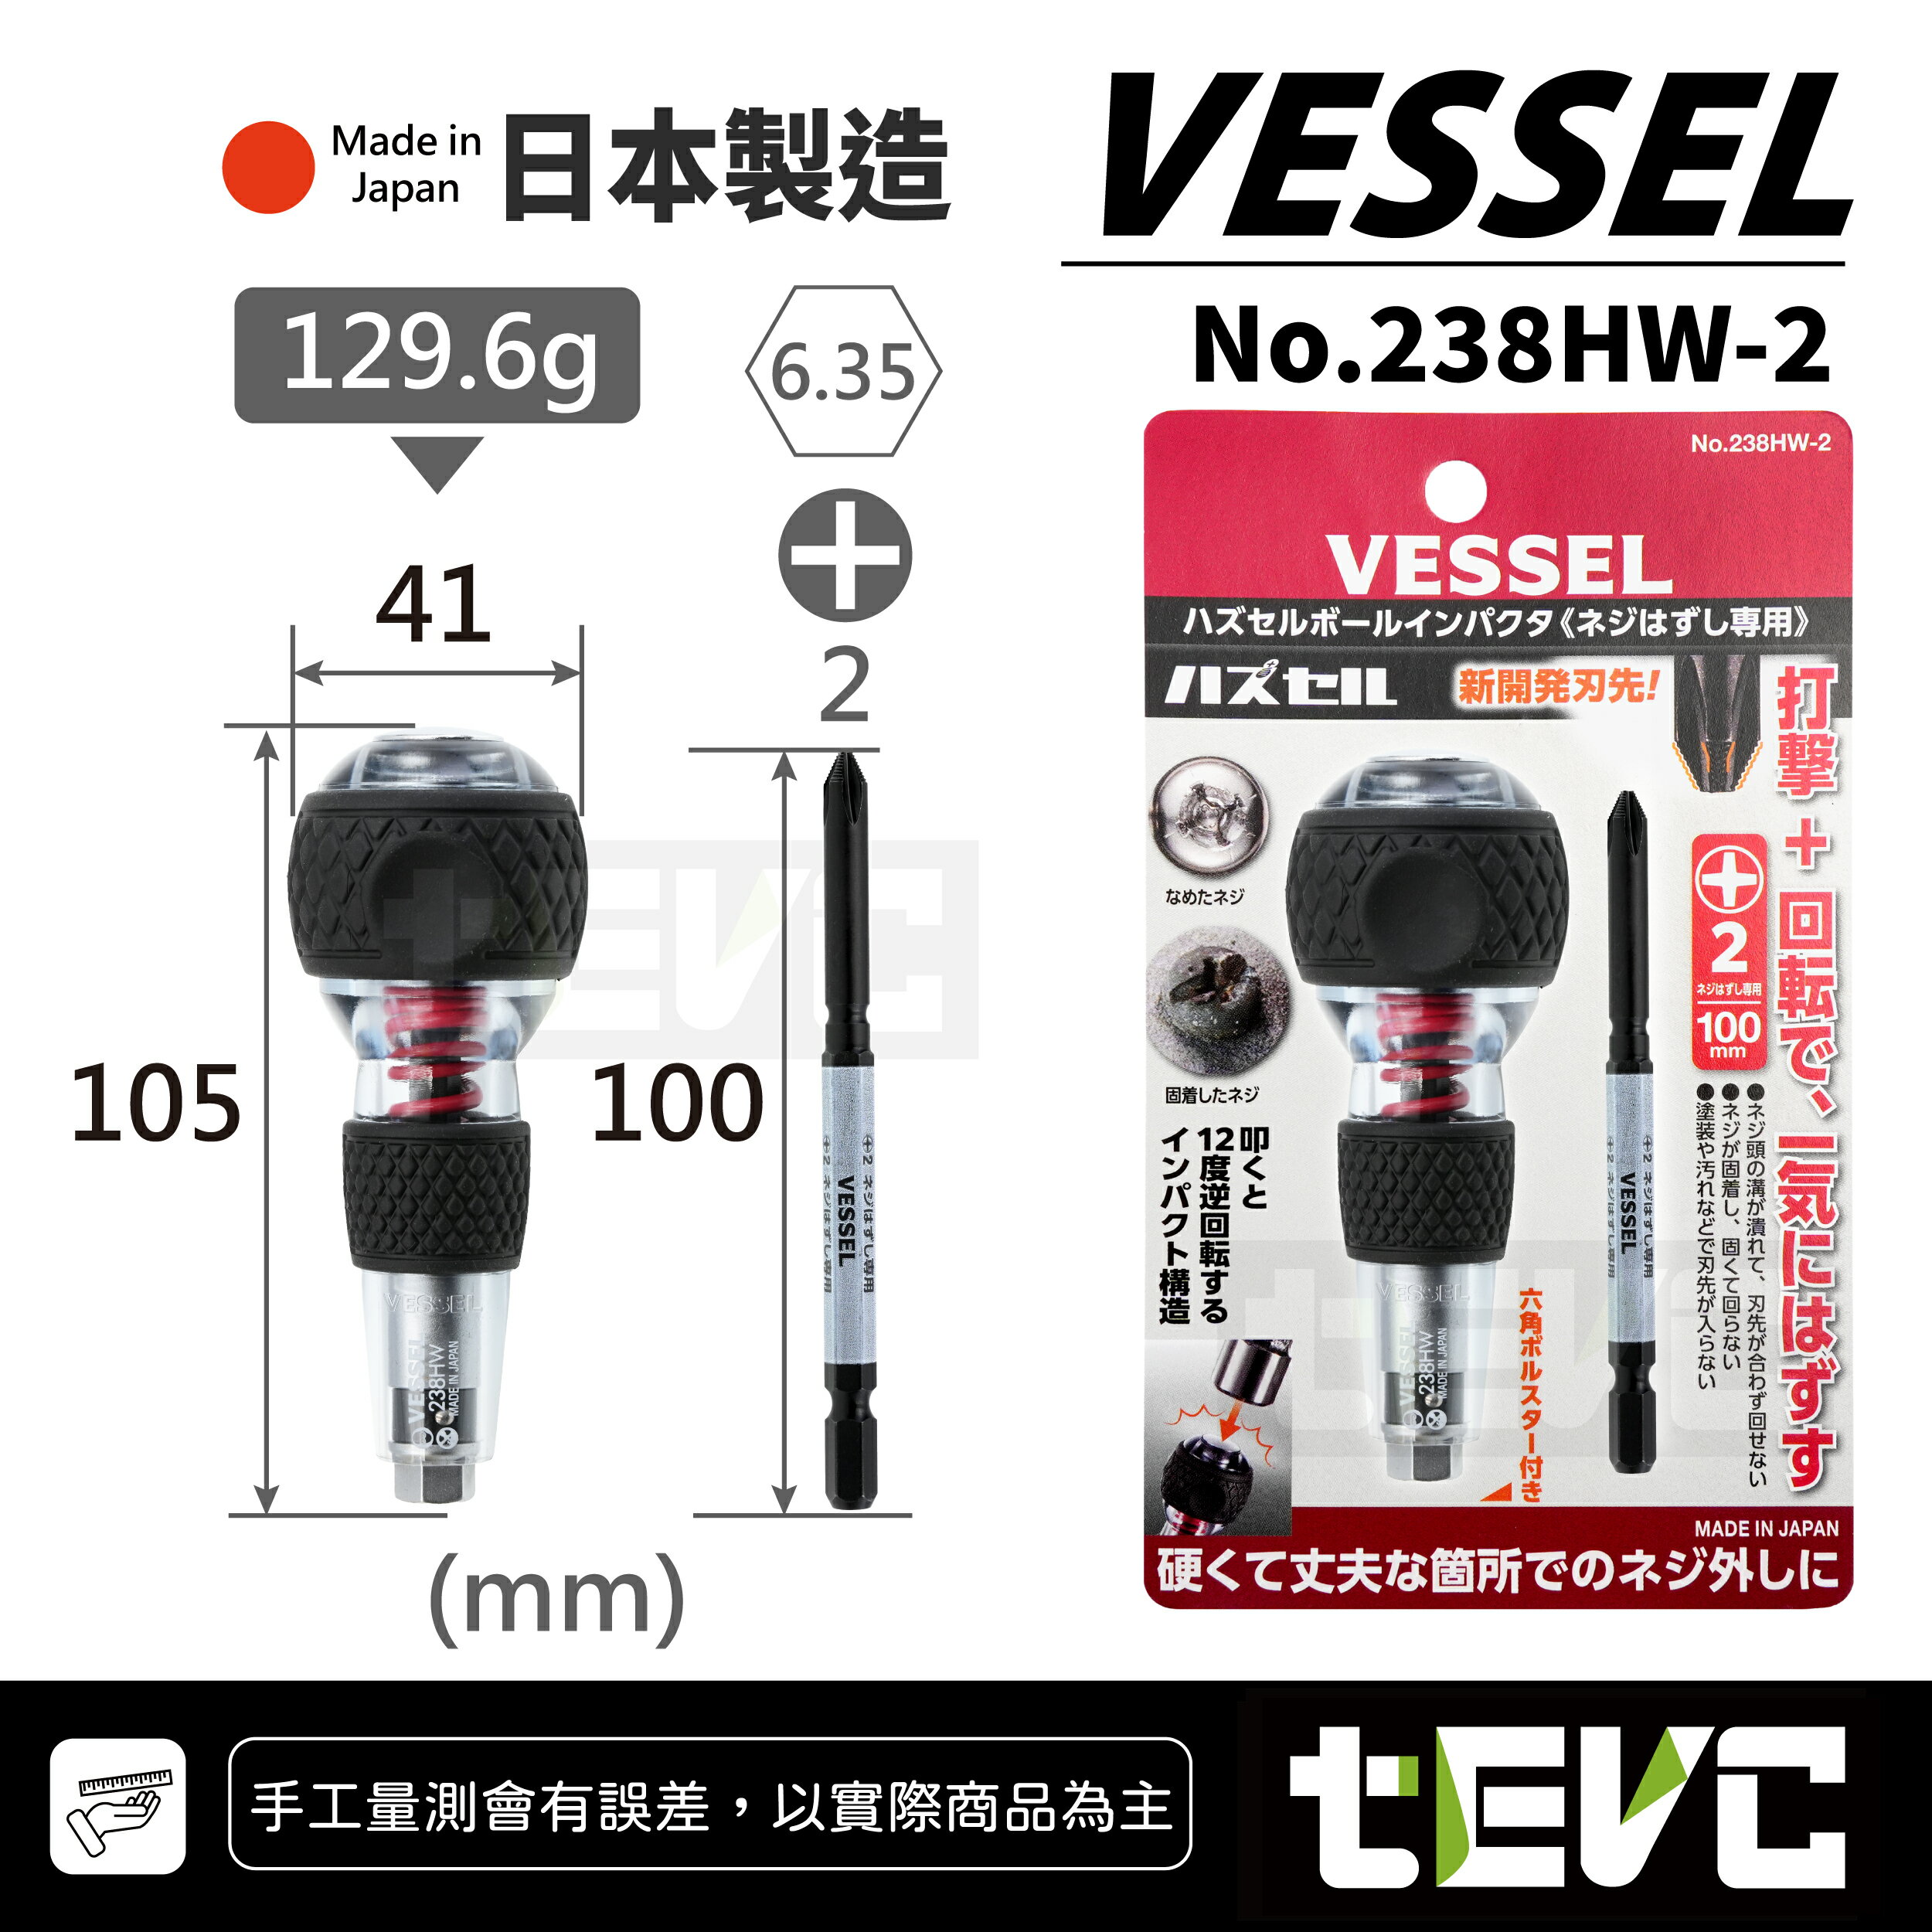 《tevc》日本製 VESSEL 新品發表! 衝擊起子 238HW-2 螺絲 生鏽 難拆 解決 十字 開花 六角 透明